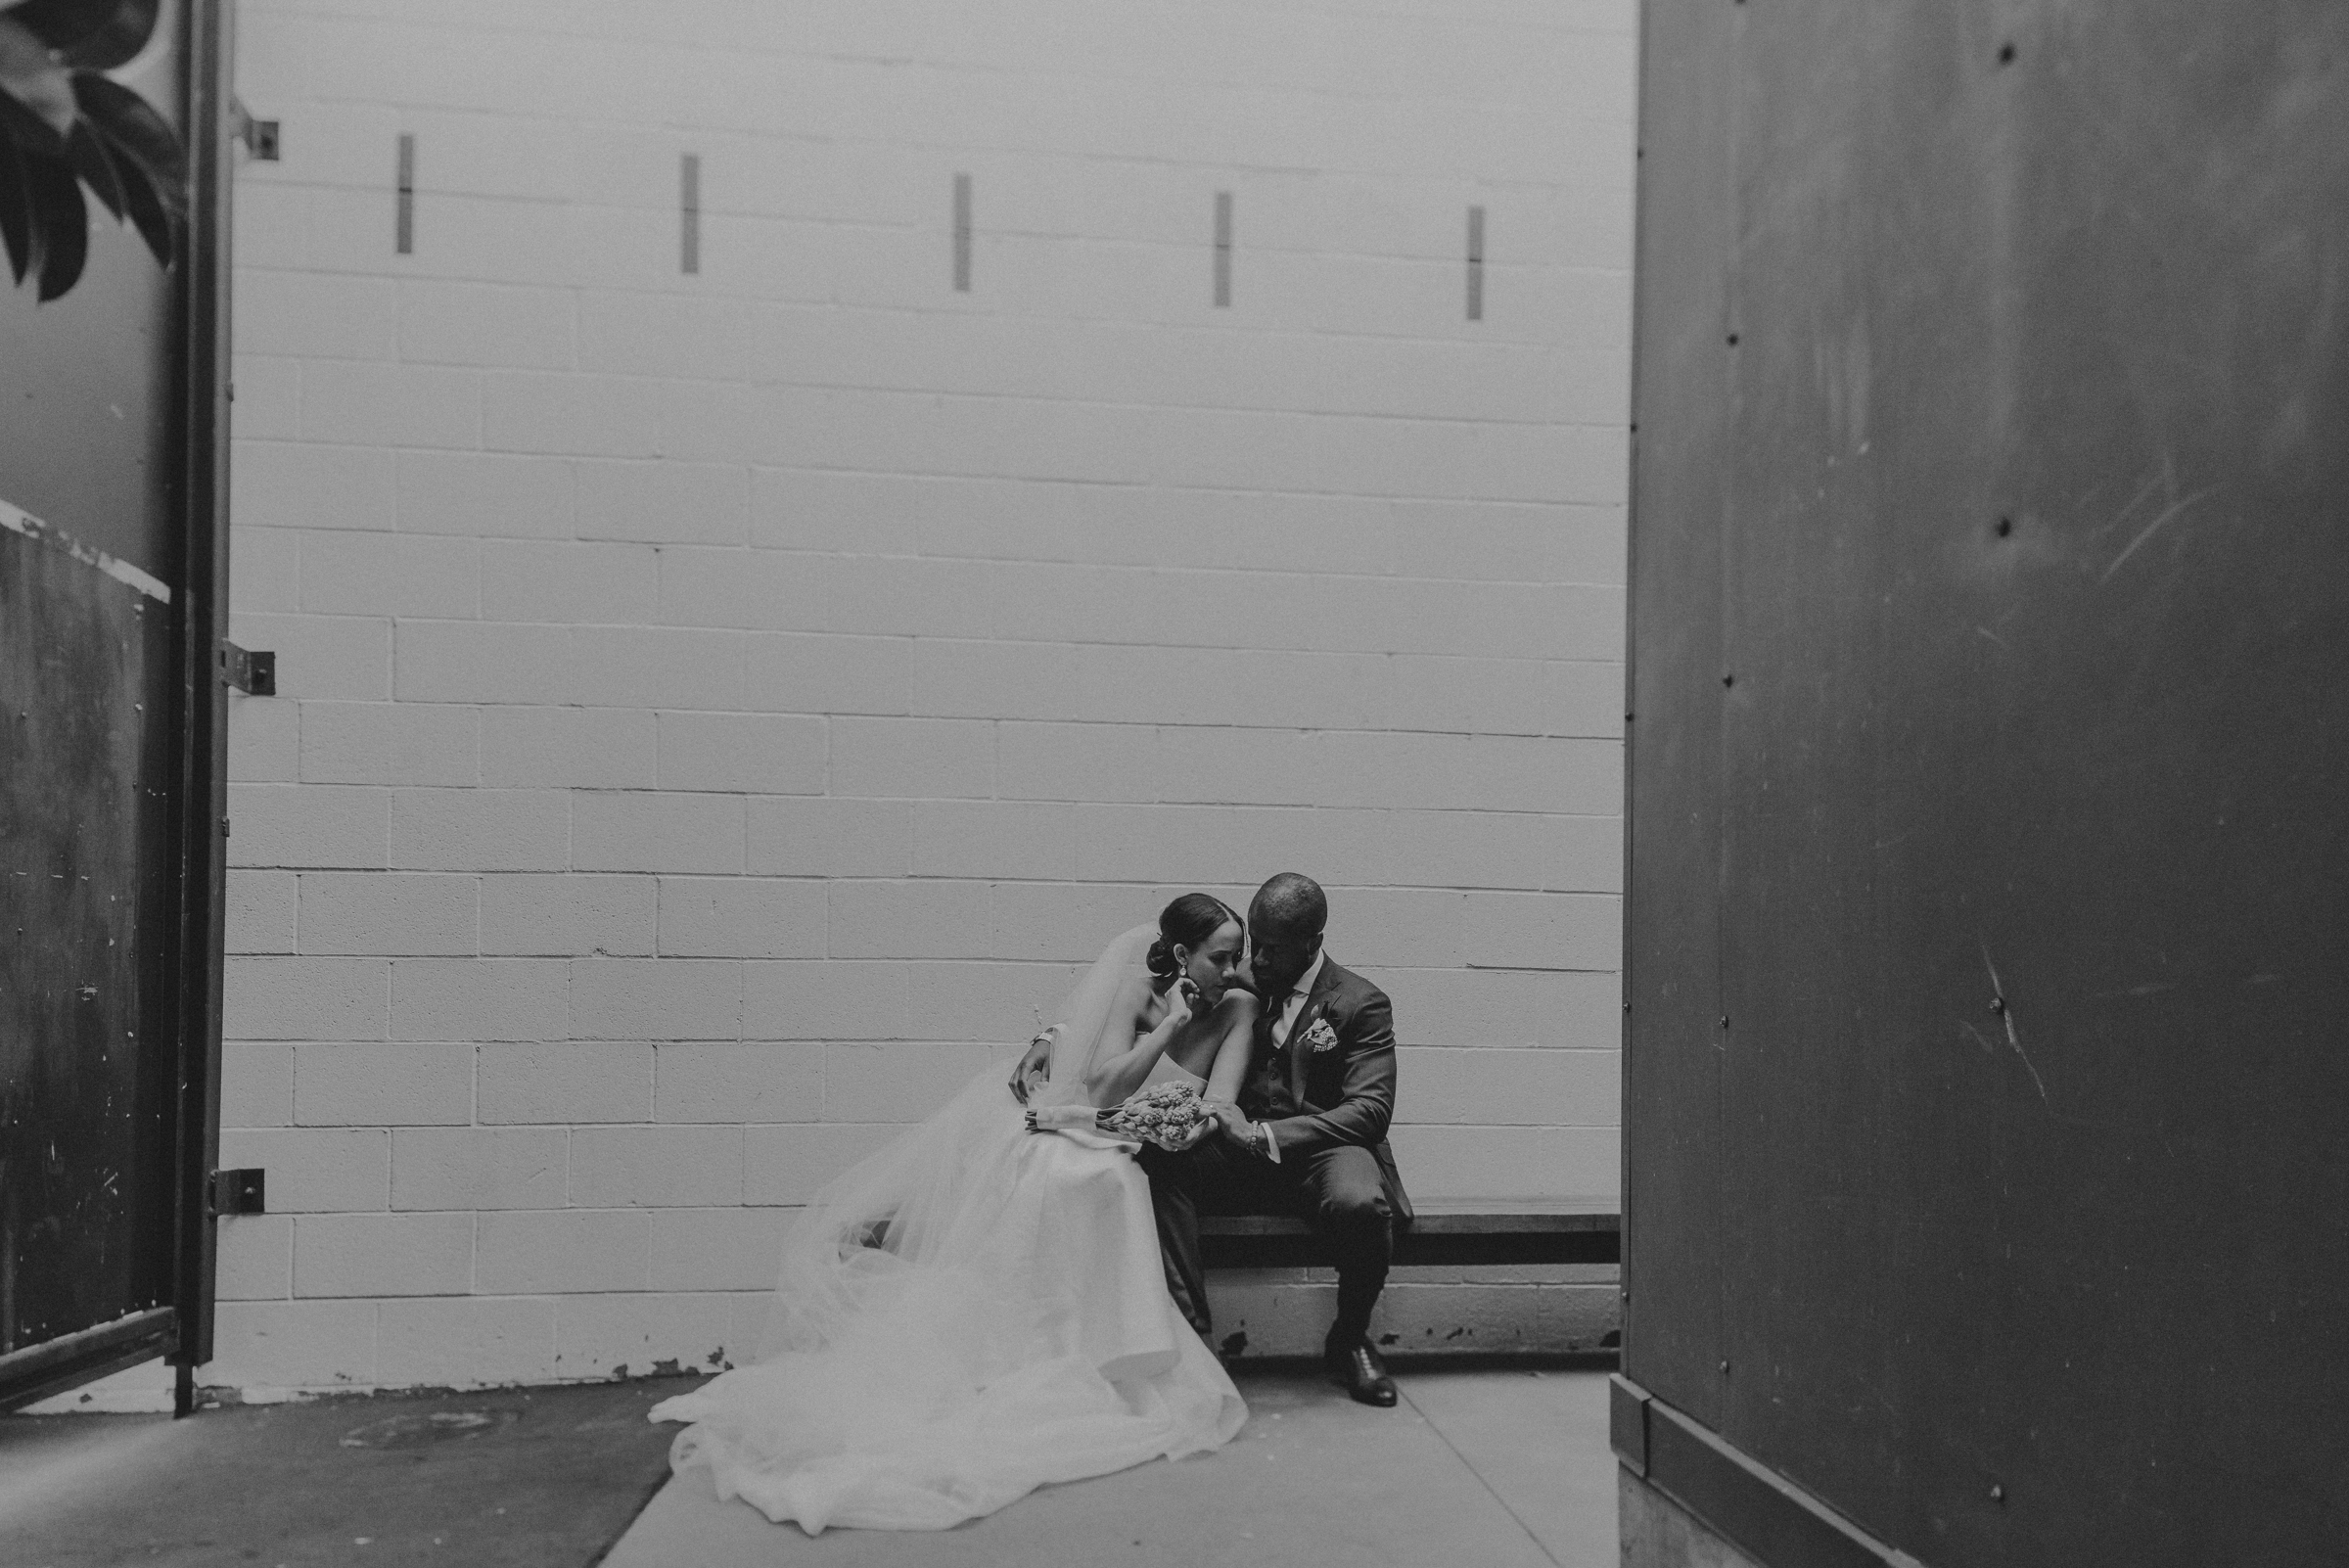 Los Angeles Wedding Photography - Millwick Venue - IsaiahAndTaylor.com-090.jpg